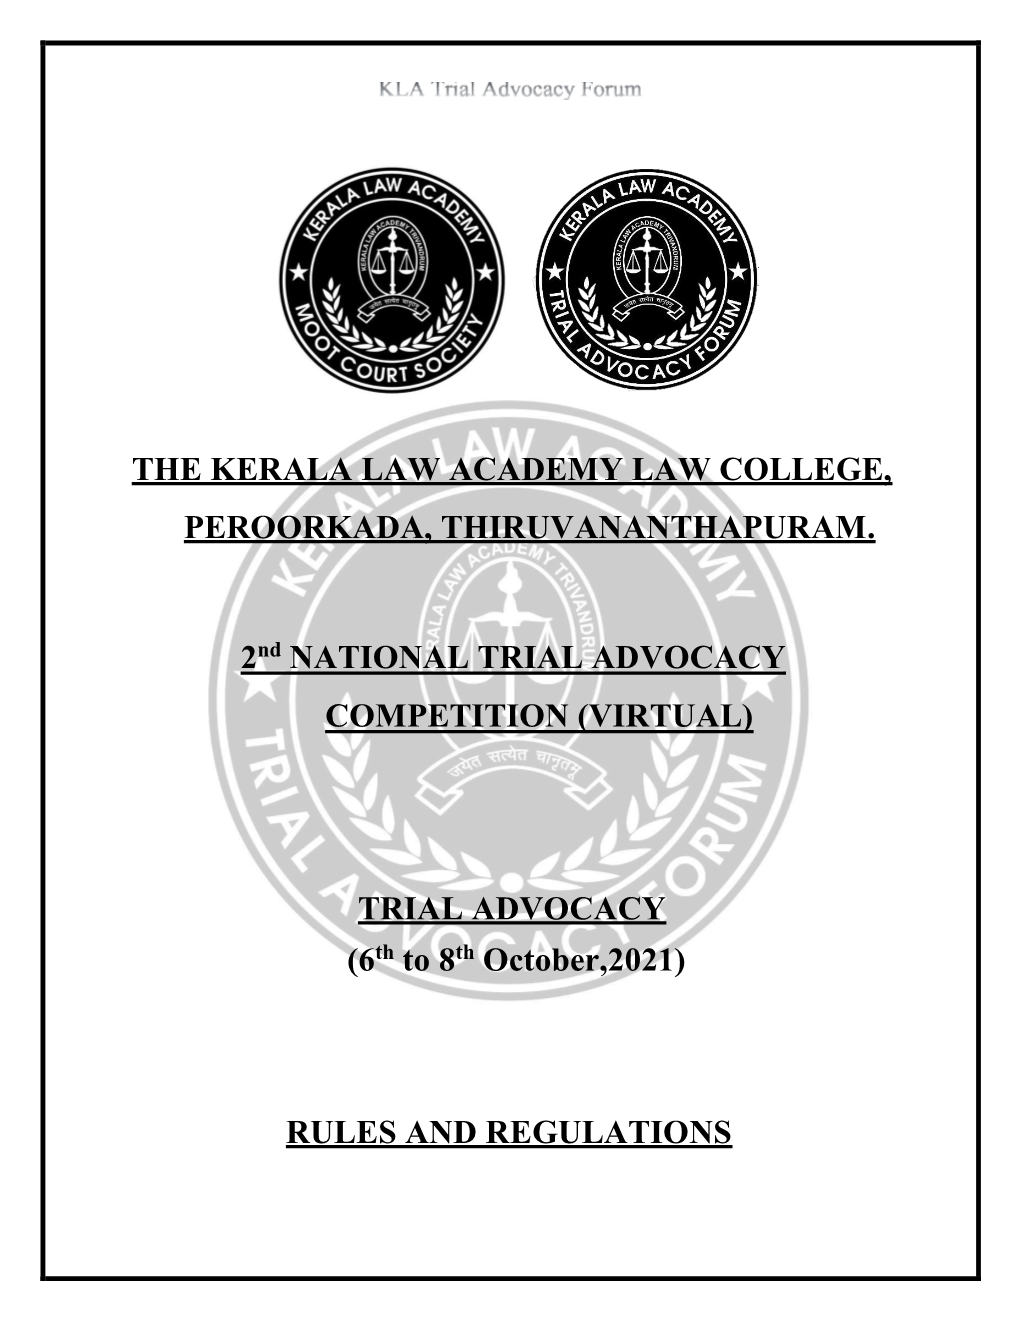 The Kerala Law Academy Law College, Peroorkada, Thiruvananthapuram